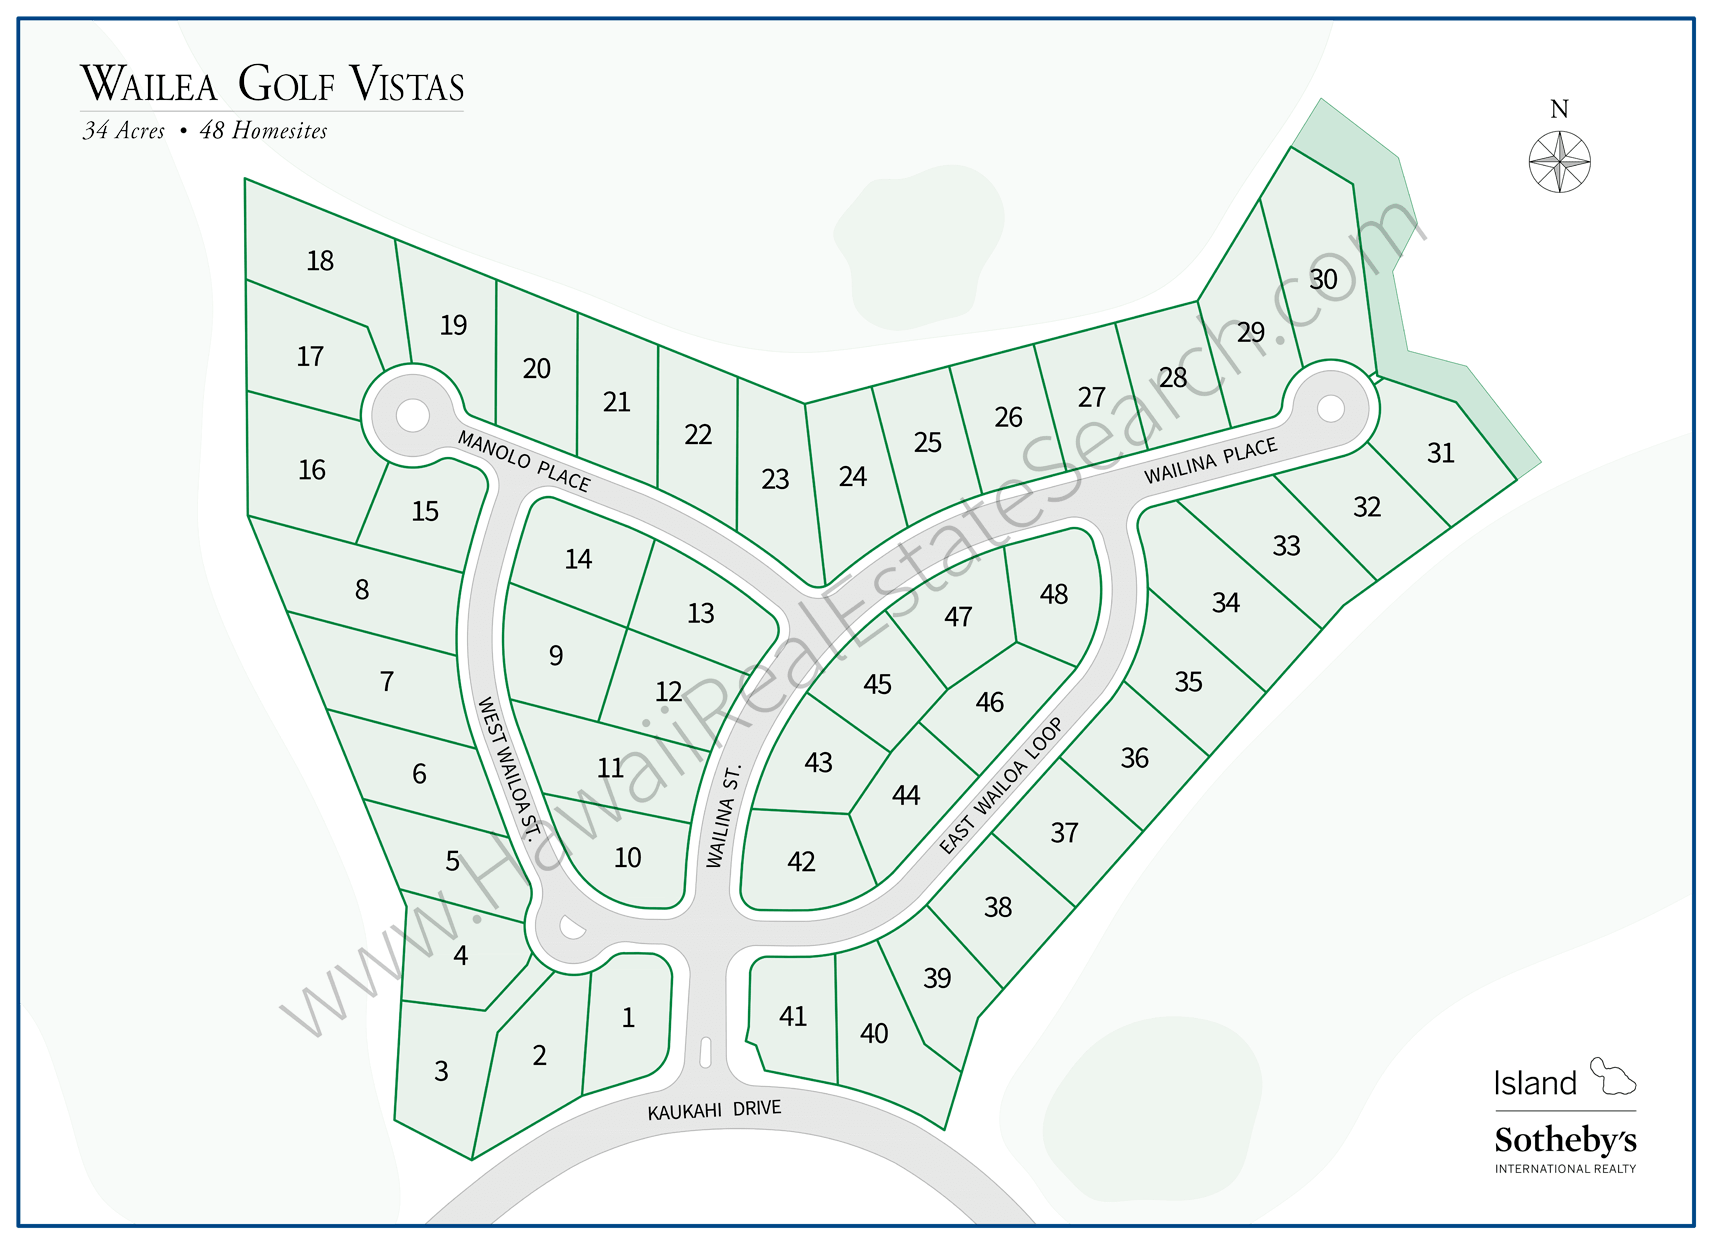 Wailea Golf Vistas Map Updated 2018